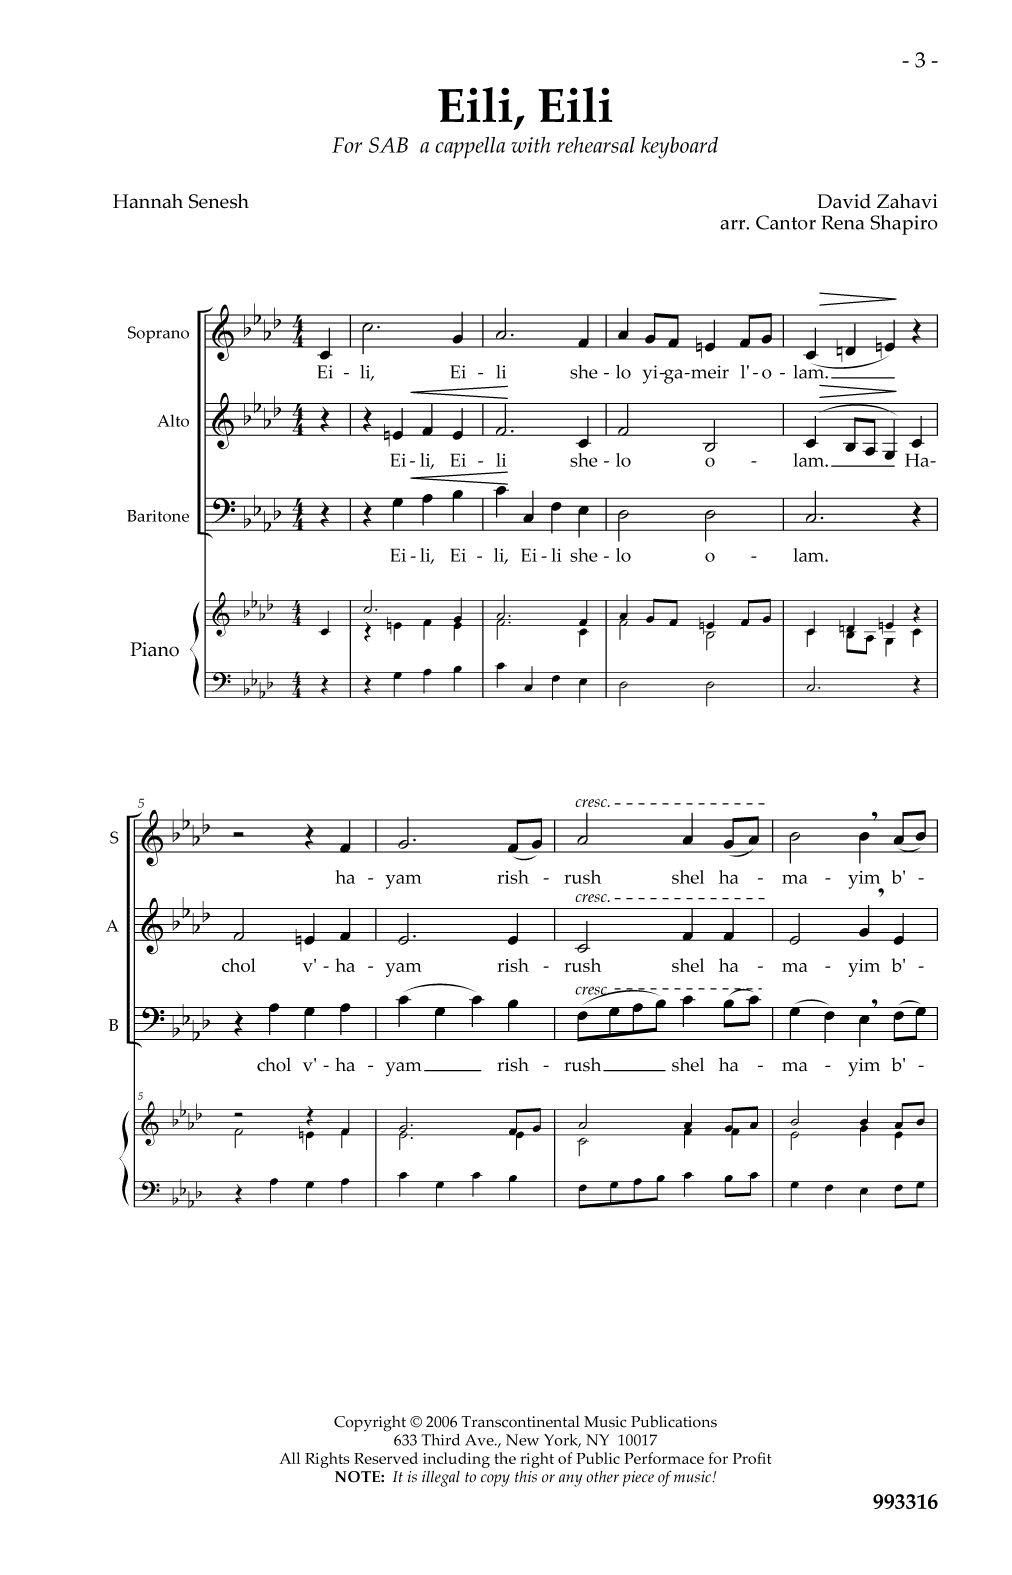 Download Cantor Rena Shapiro Eili Eili Sheet Music and learn how to play SAB Choir PDF digital score in minutes